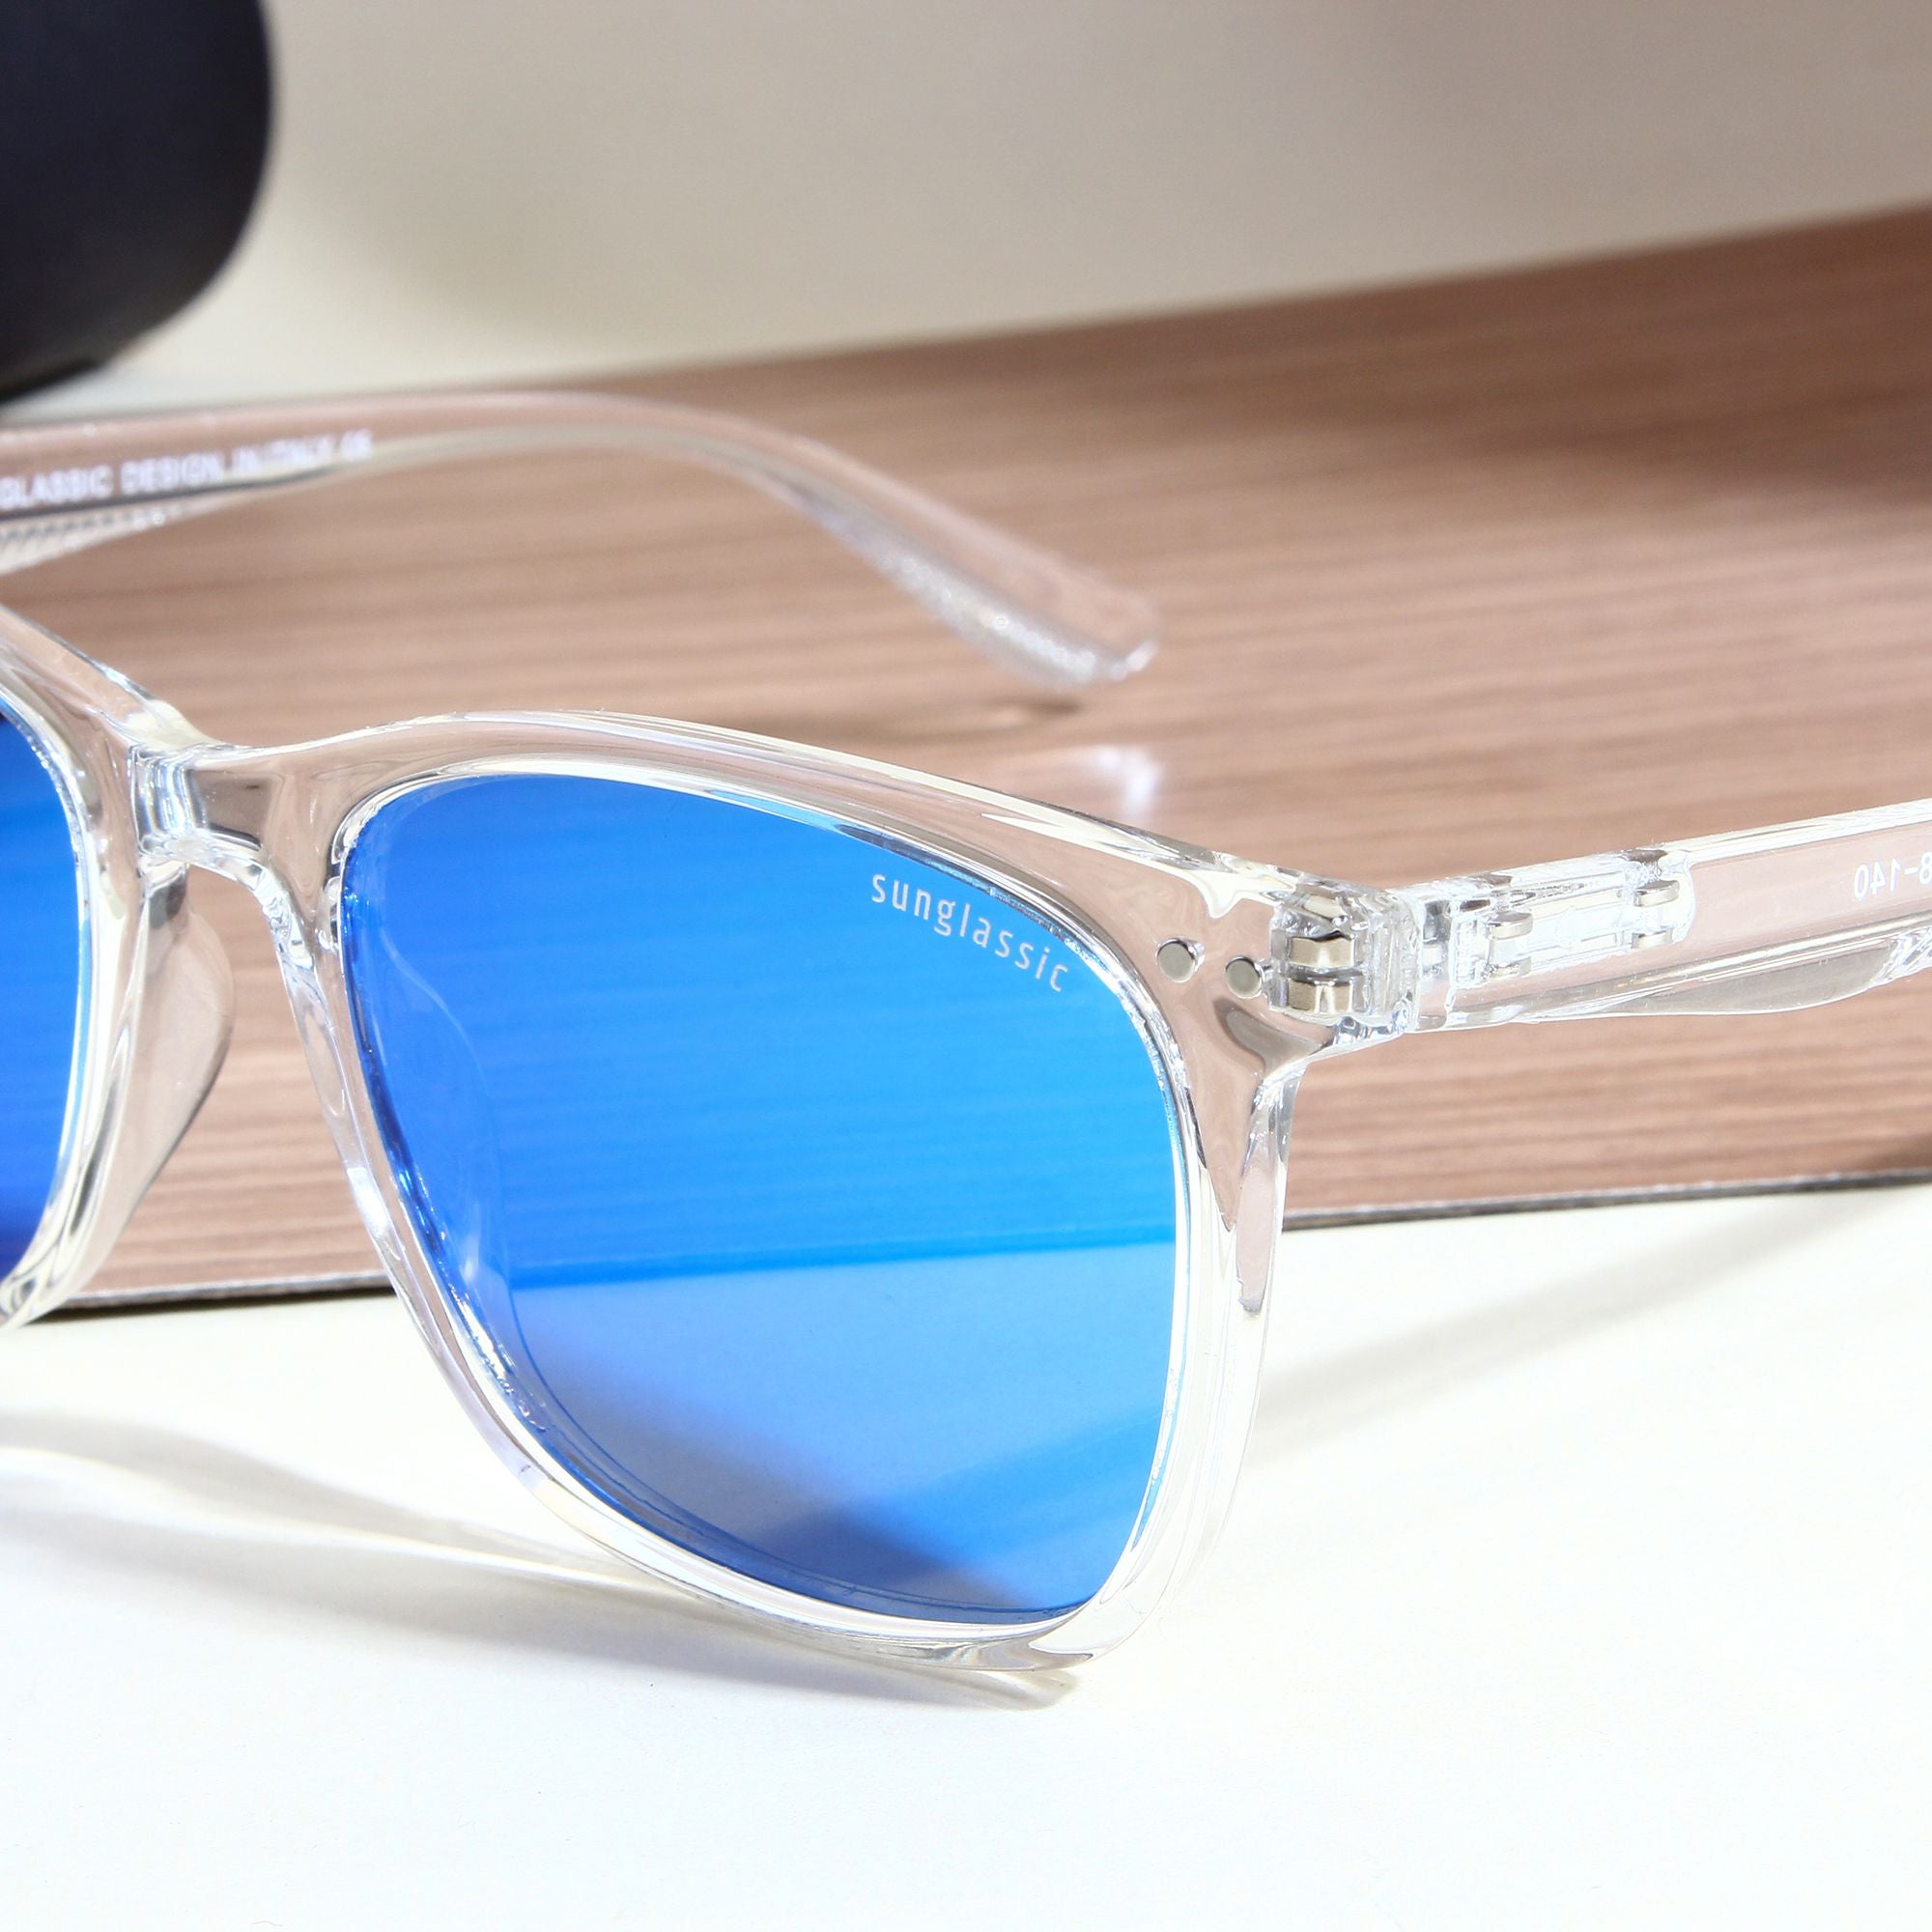 Marlton. Aqua Mercurial Polarized TR90 Square Sunglasses